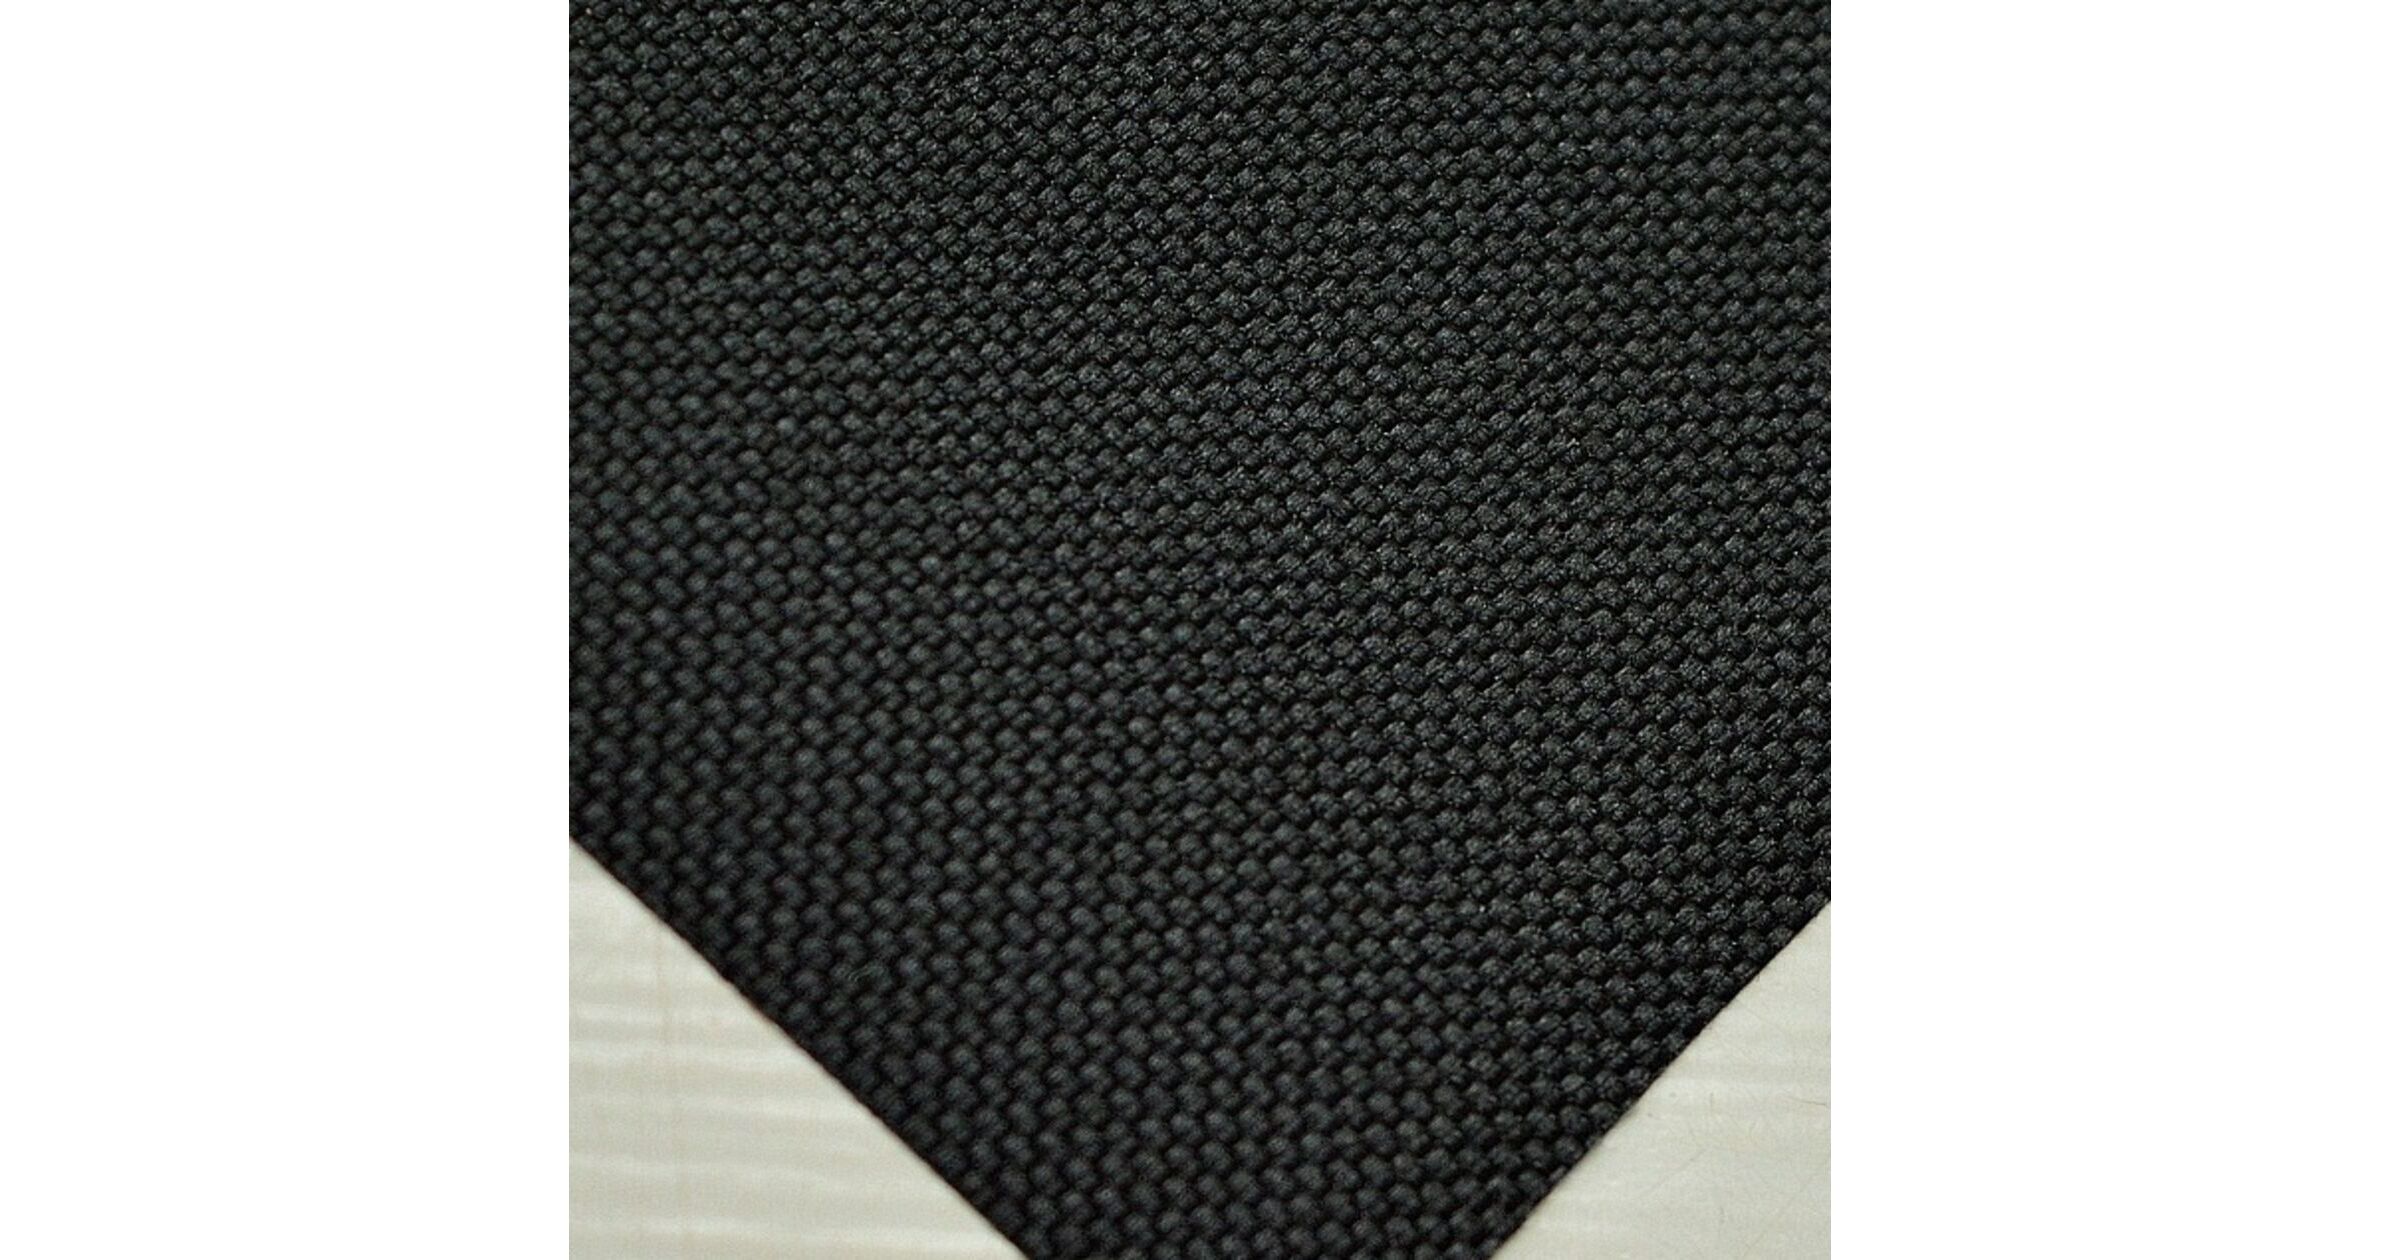 Medium PU Coated Water Resistant Canvas Fabric - Black